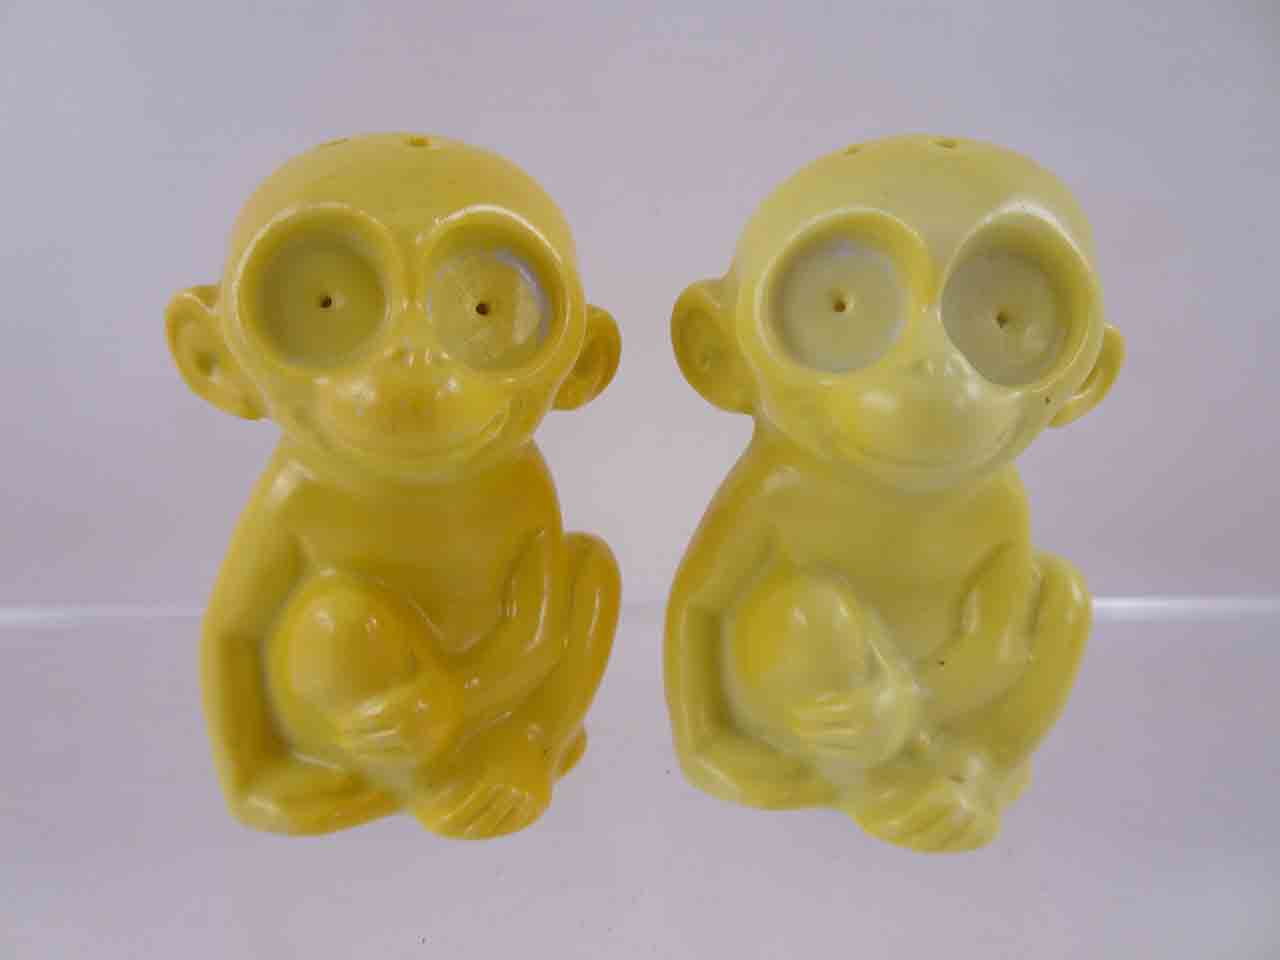 Germany google-eyed animal salt and pepper shakers - monkeys